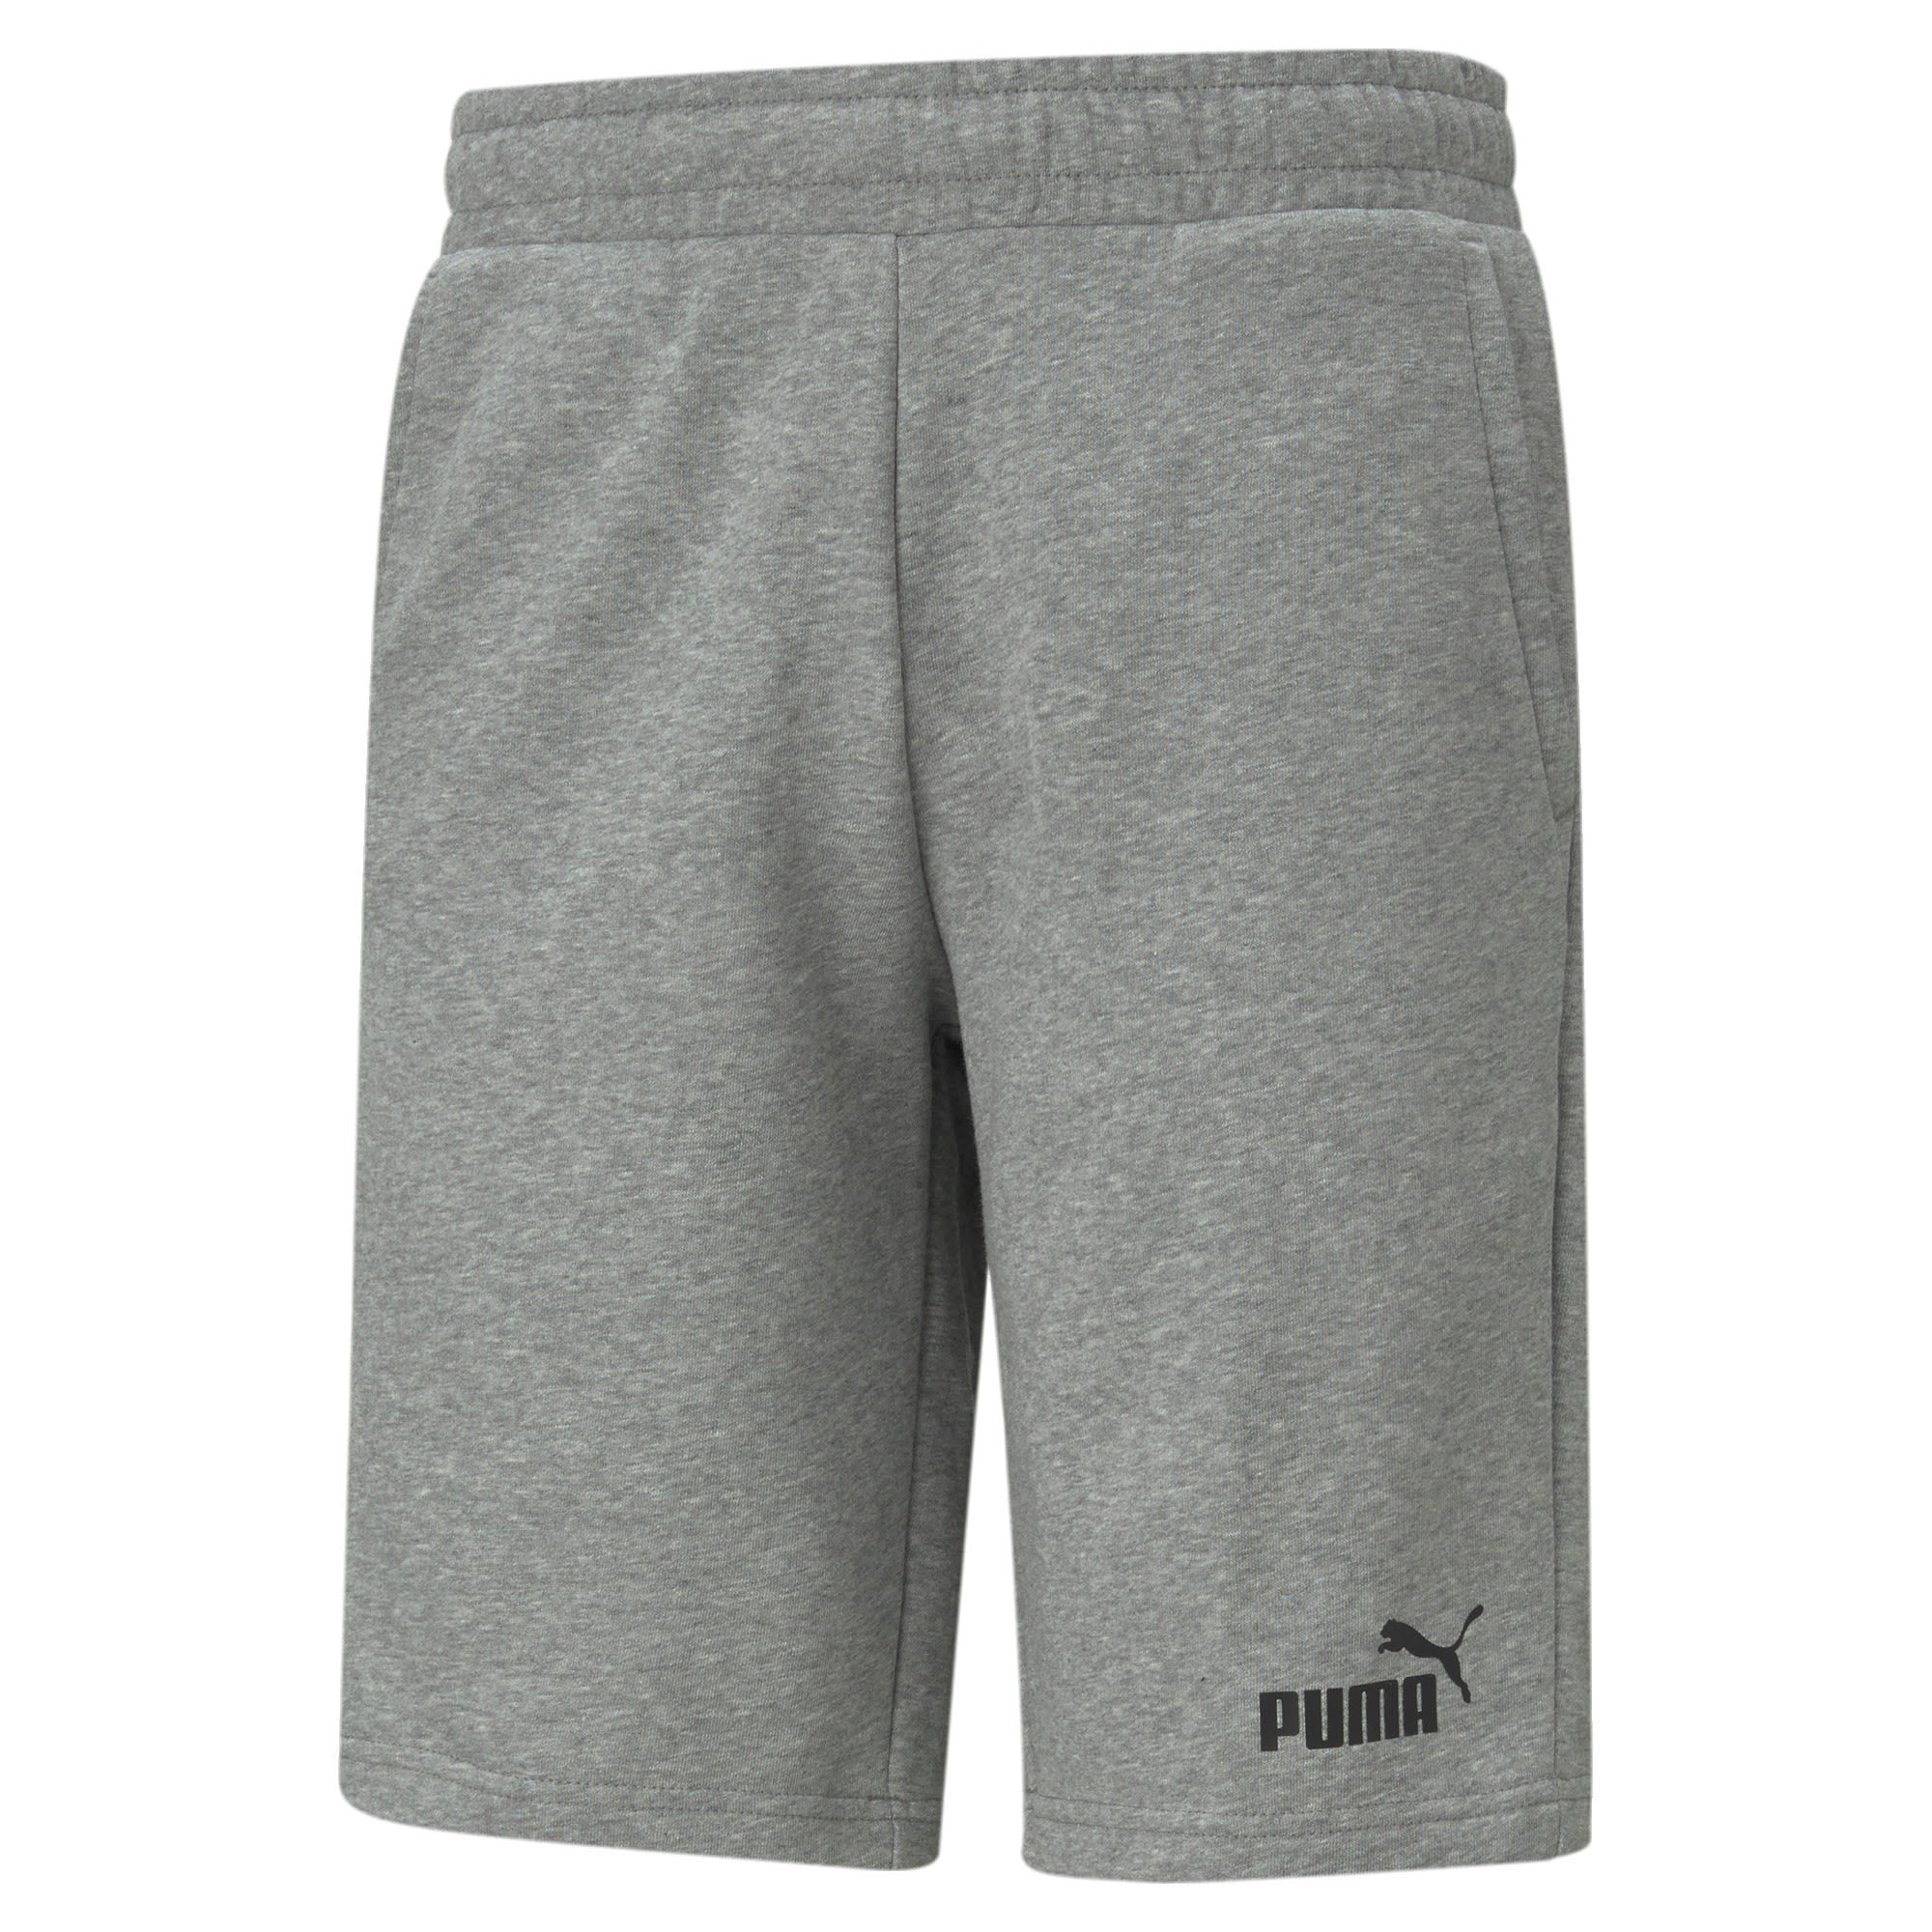 Puma Essentials Shorts Grau- Male Shorts- Grsse S - Farbe Medium Gray Heather